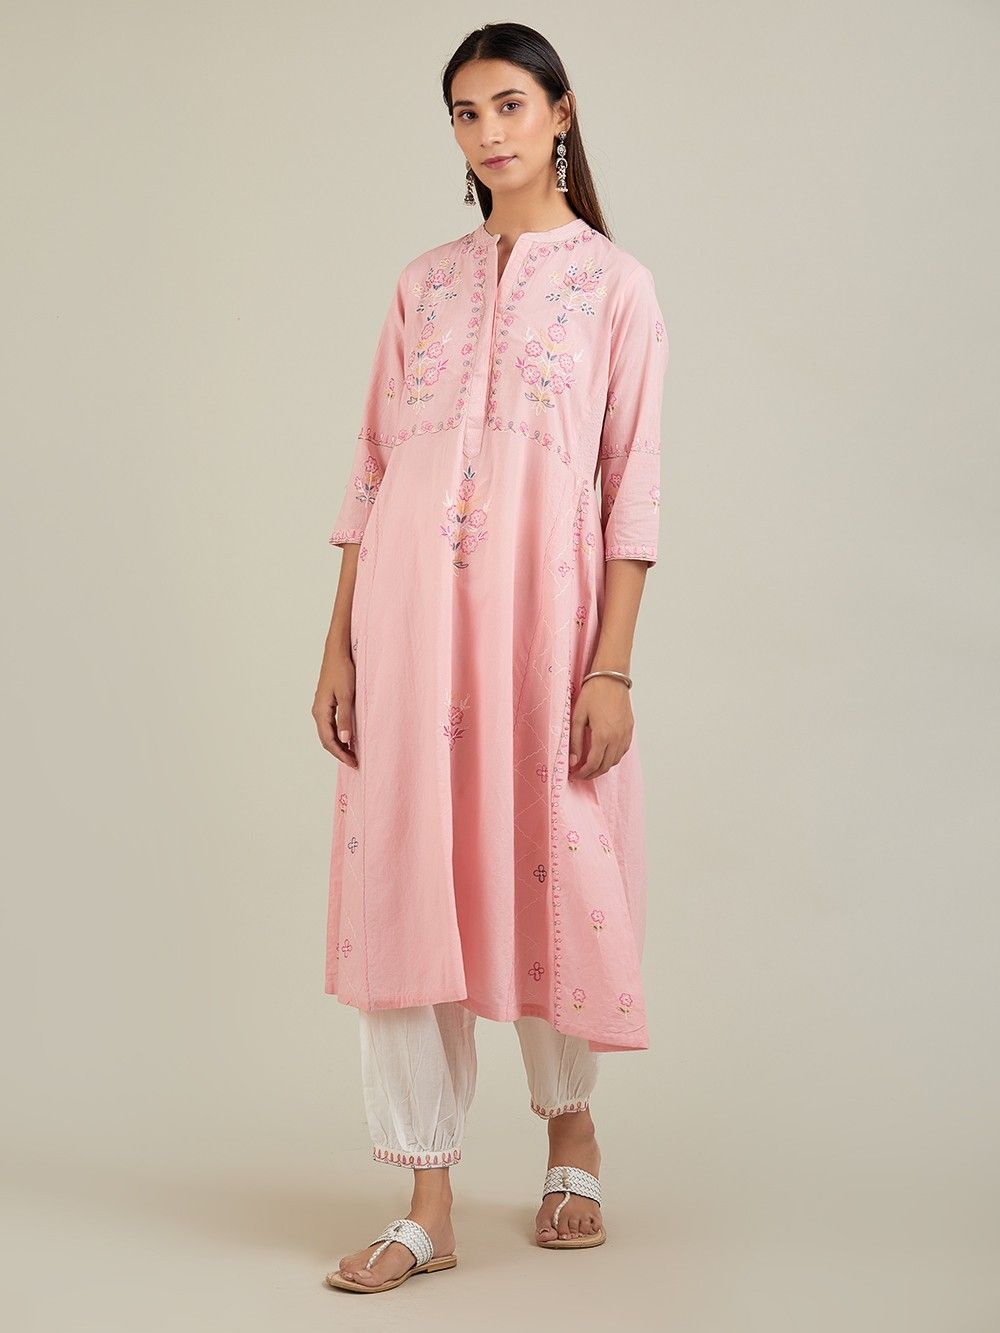 Buy Pink White Aari Embroidered Cotton Anarkali Suit - Set of 3 ...